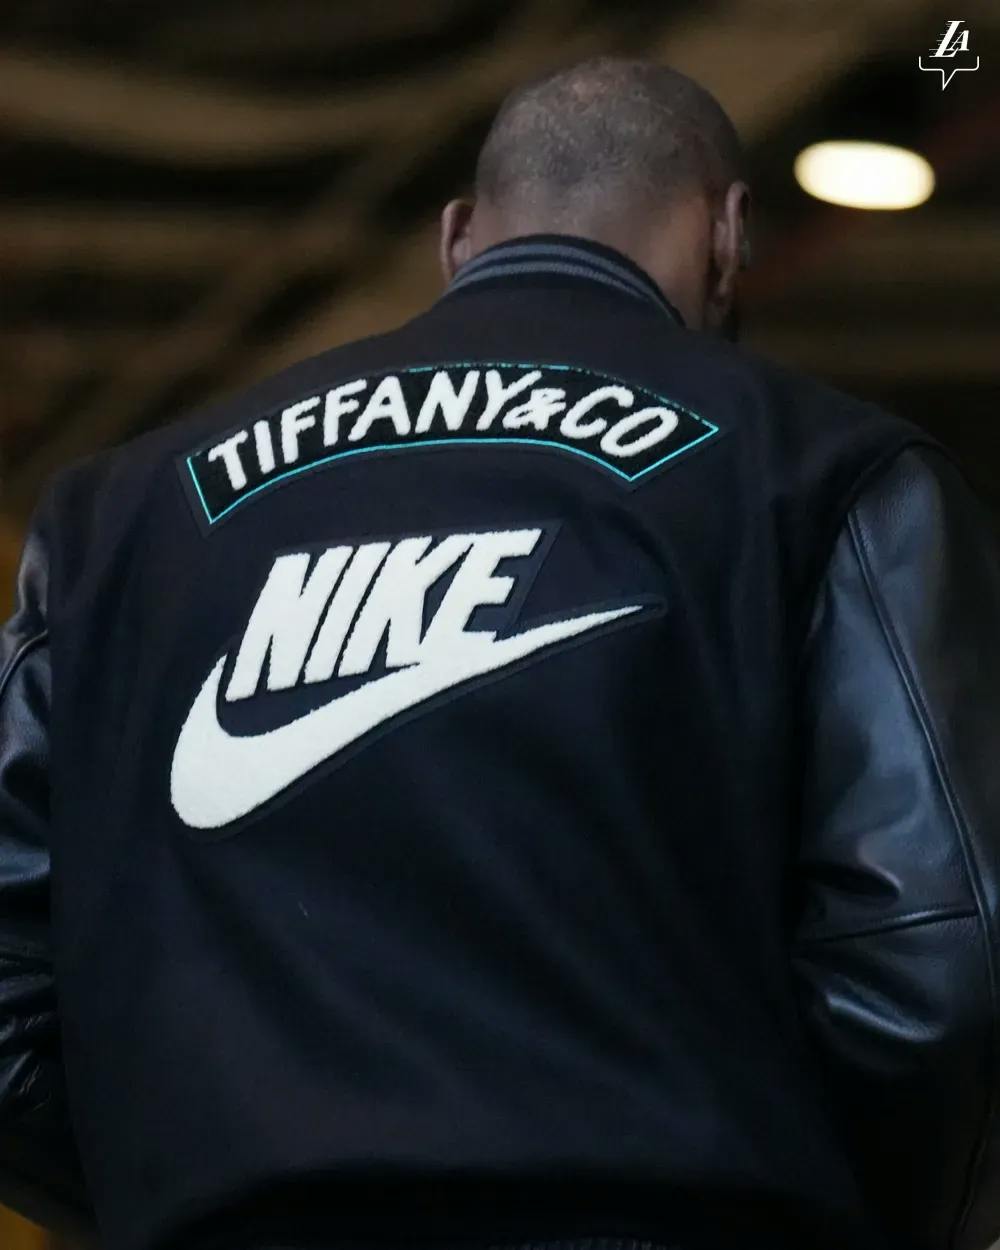 Tiffany & Co. x Nike Collaboration